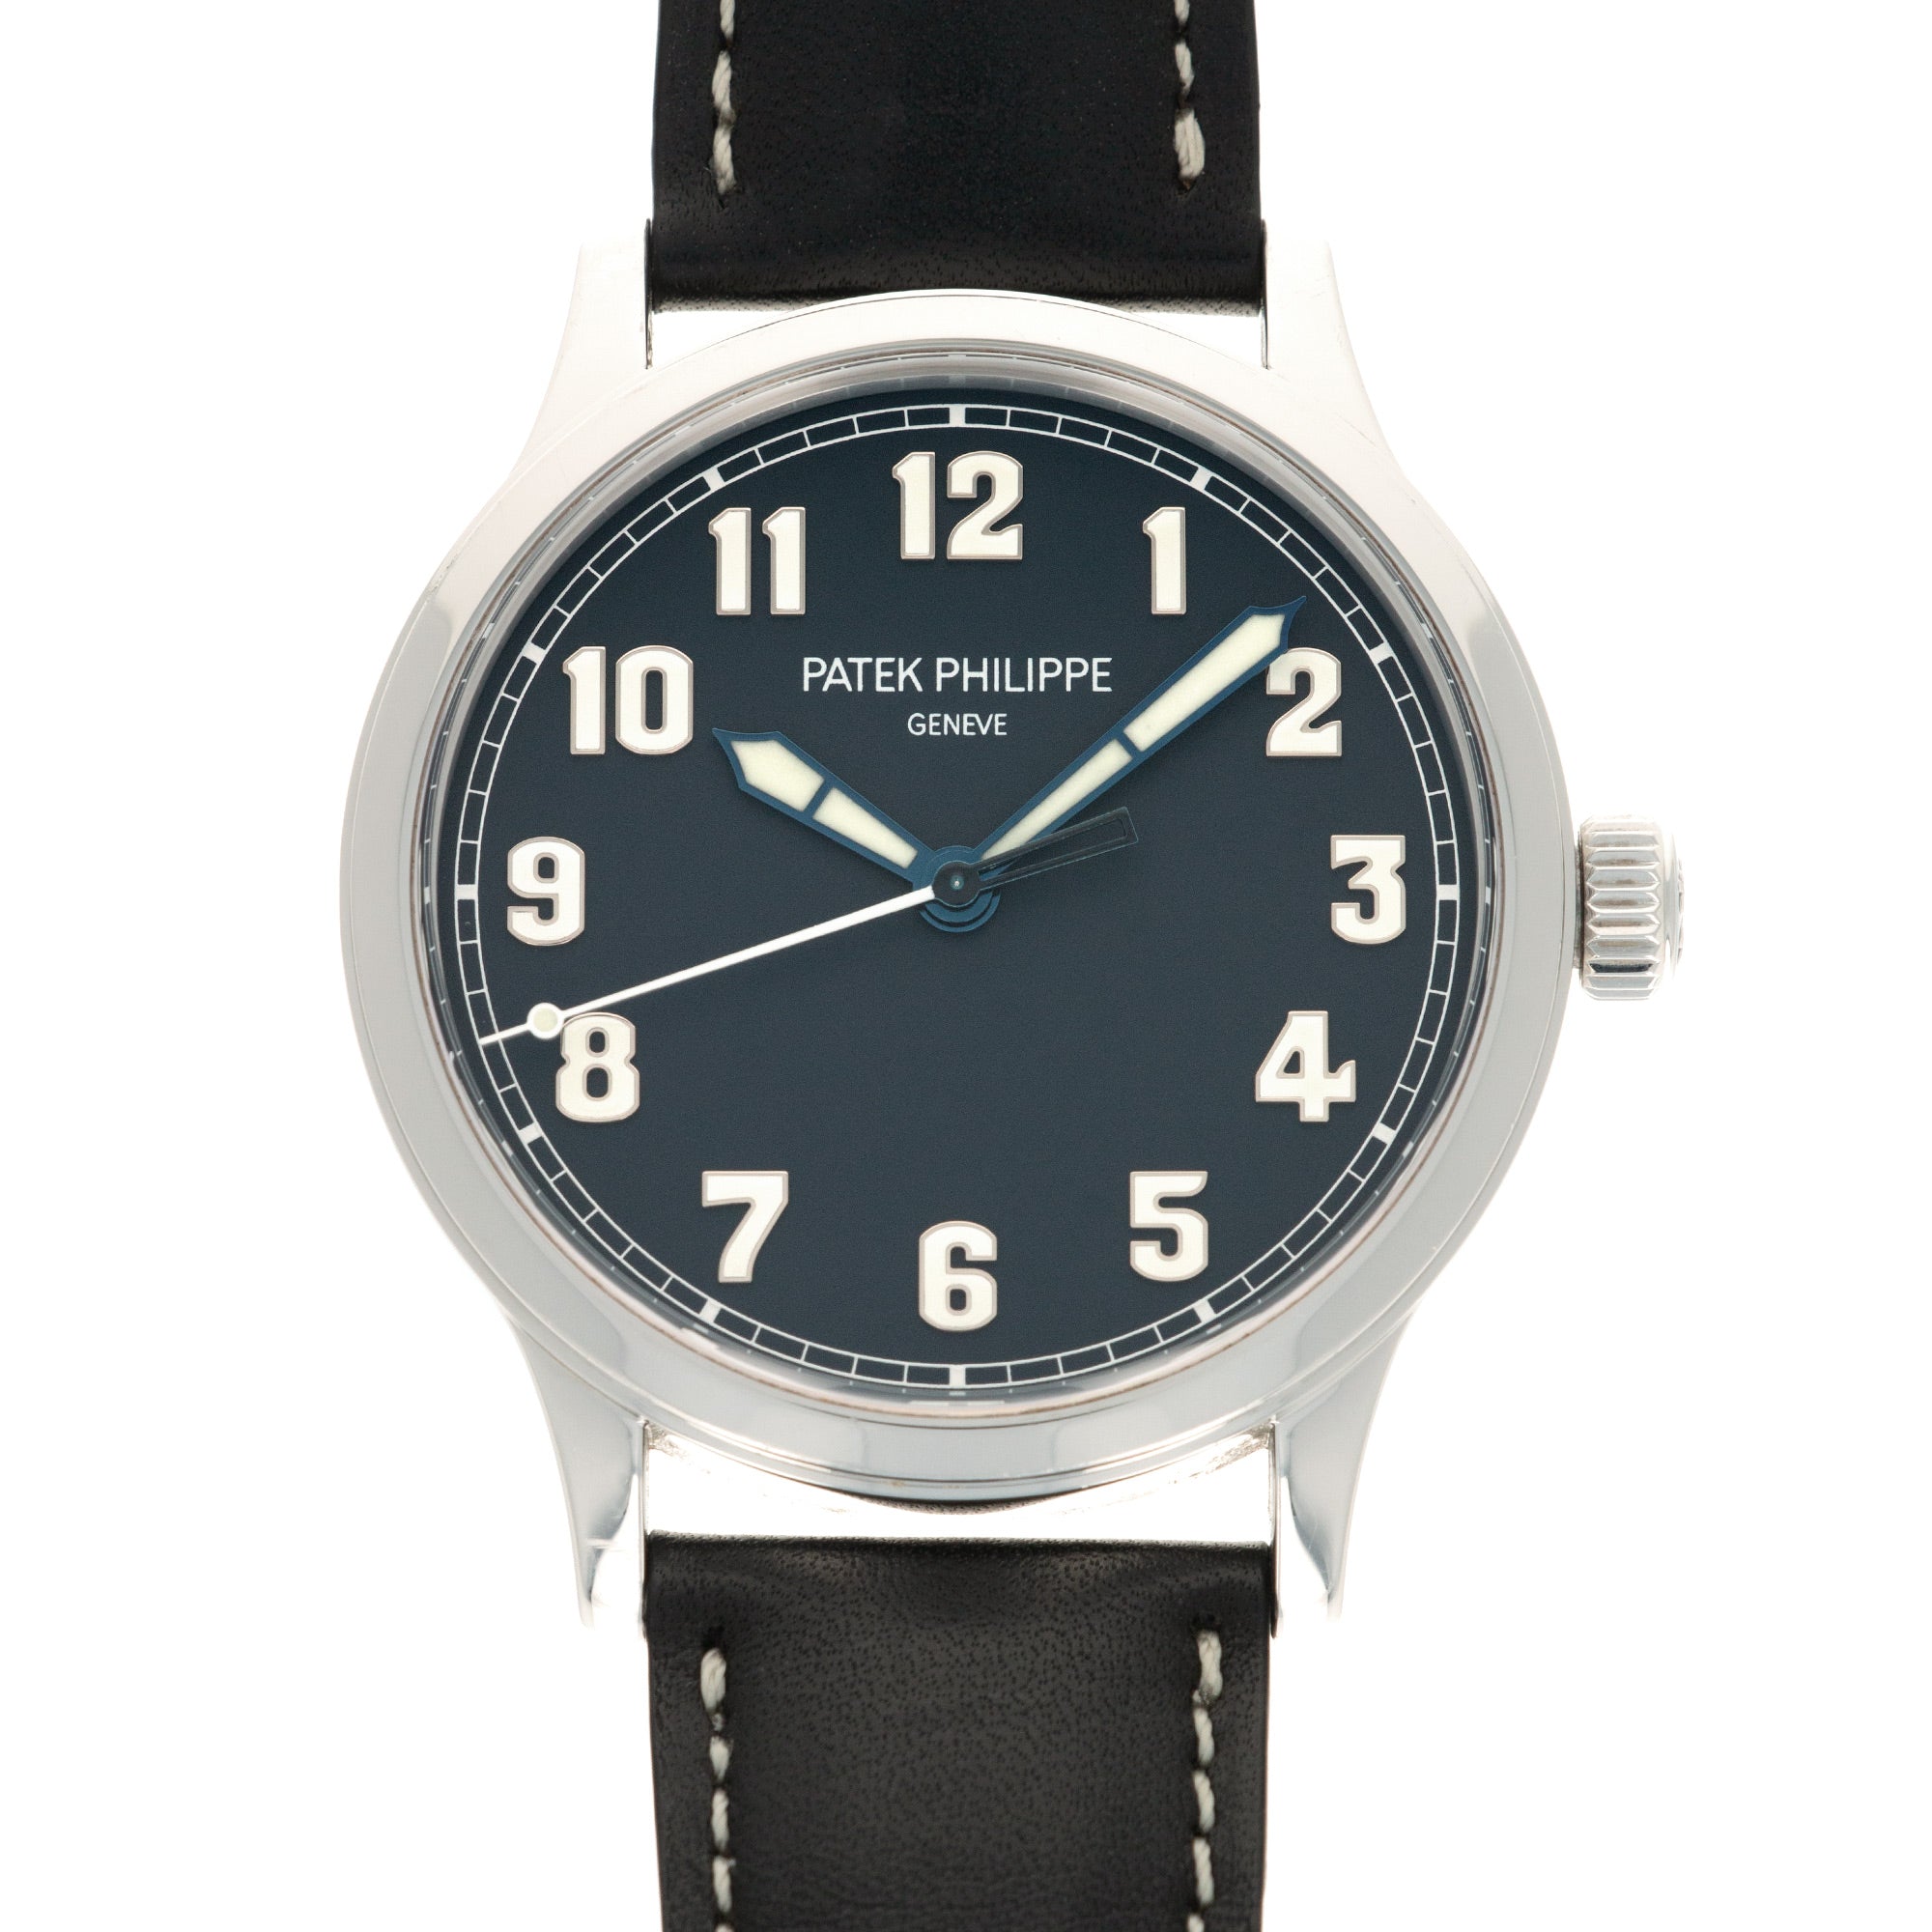 Patek Philippe - Patek Philippe Pilot Calatrava Limited New York Edition Watch Ref. 5522 - The Keystone Watches